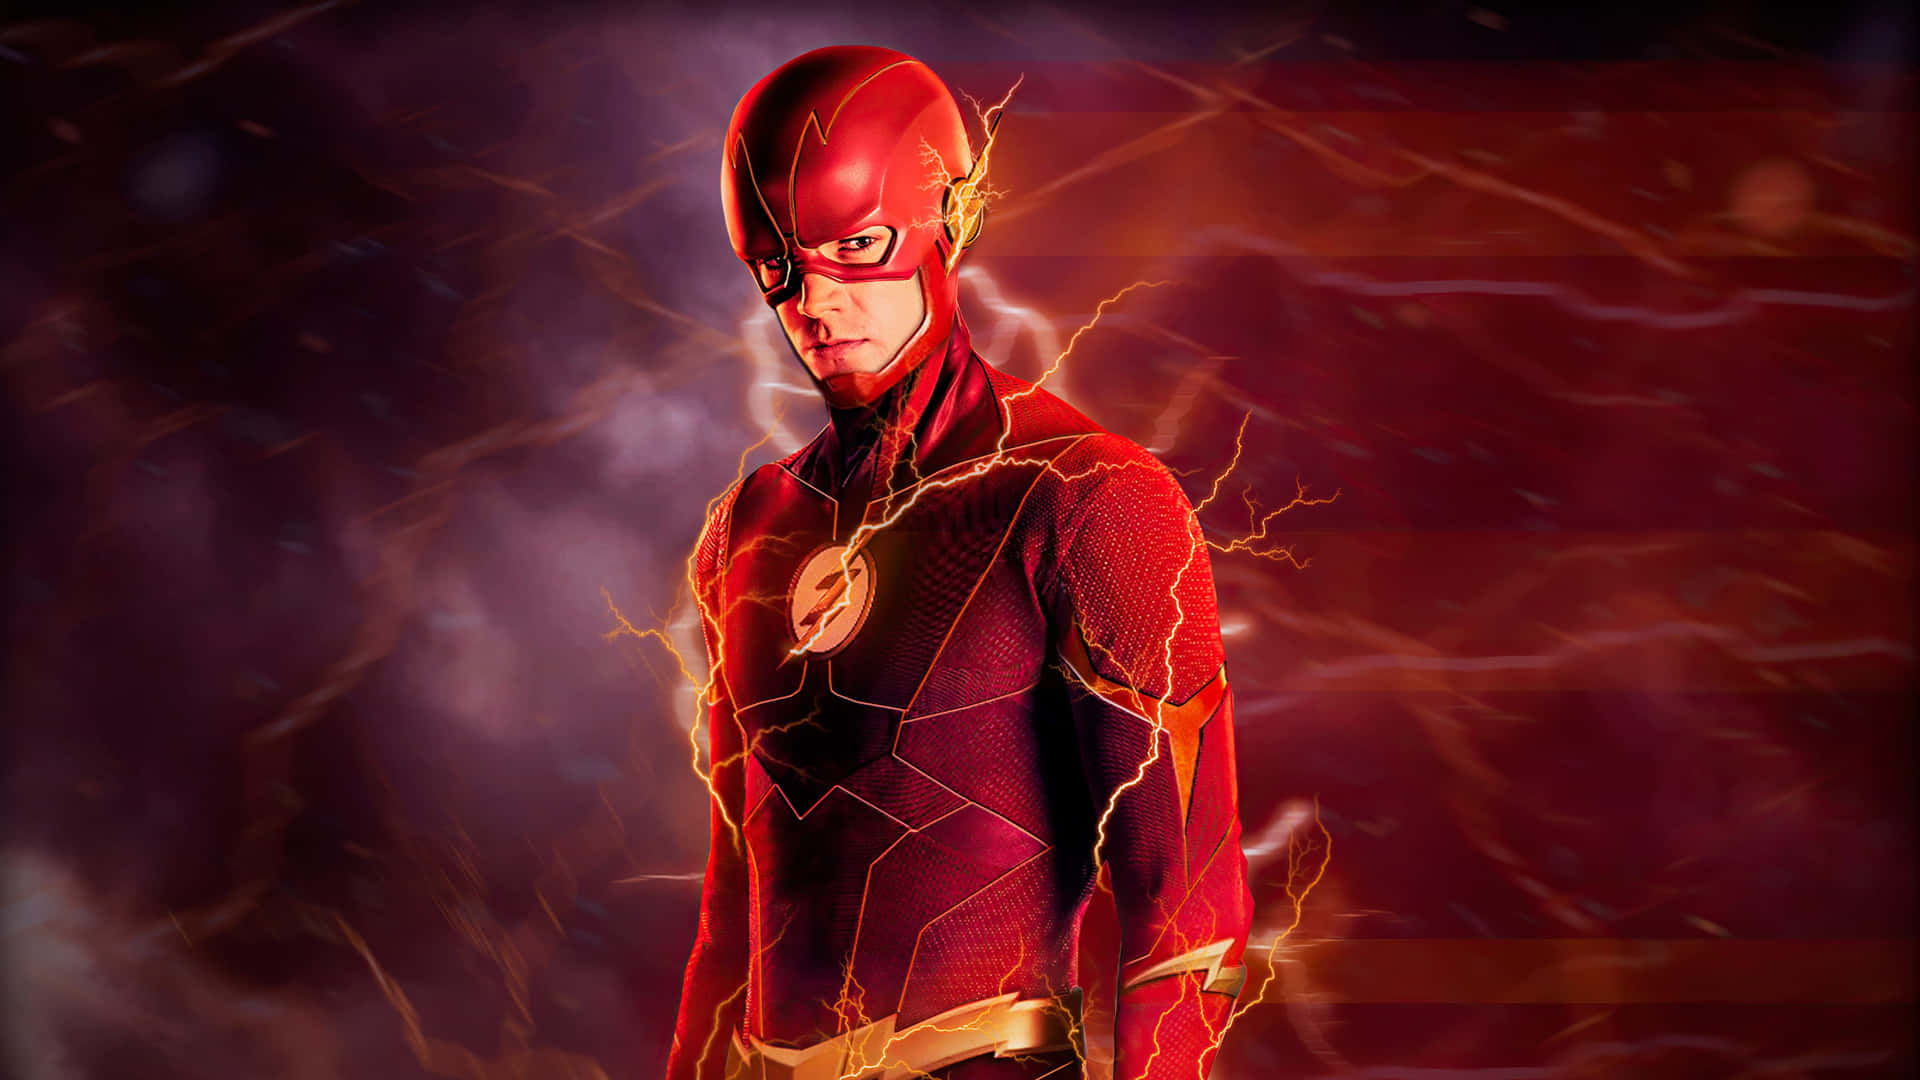 Barry Allen, the fastest man alive